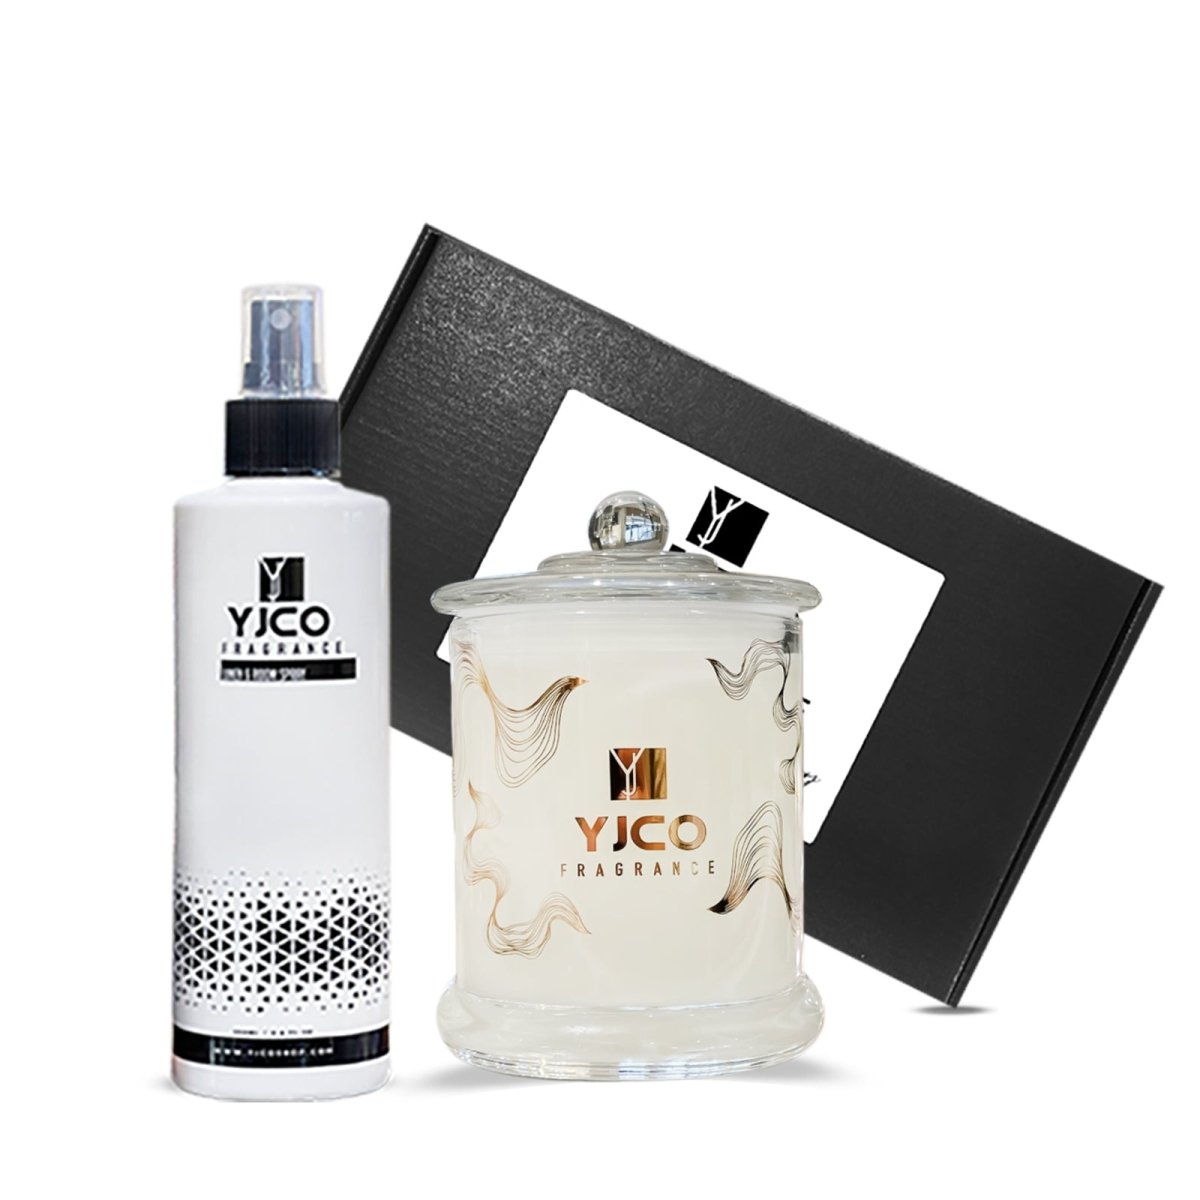 Yjco Fragrance Silver Box - YJCO FRAGRANCE